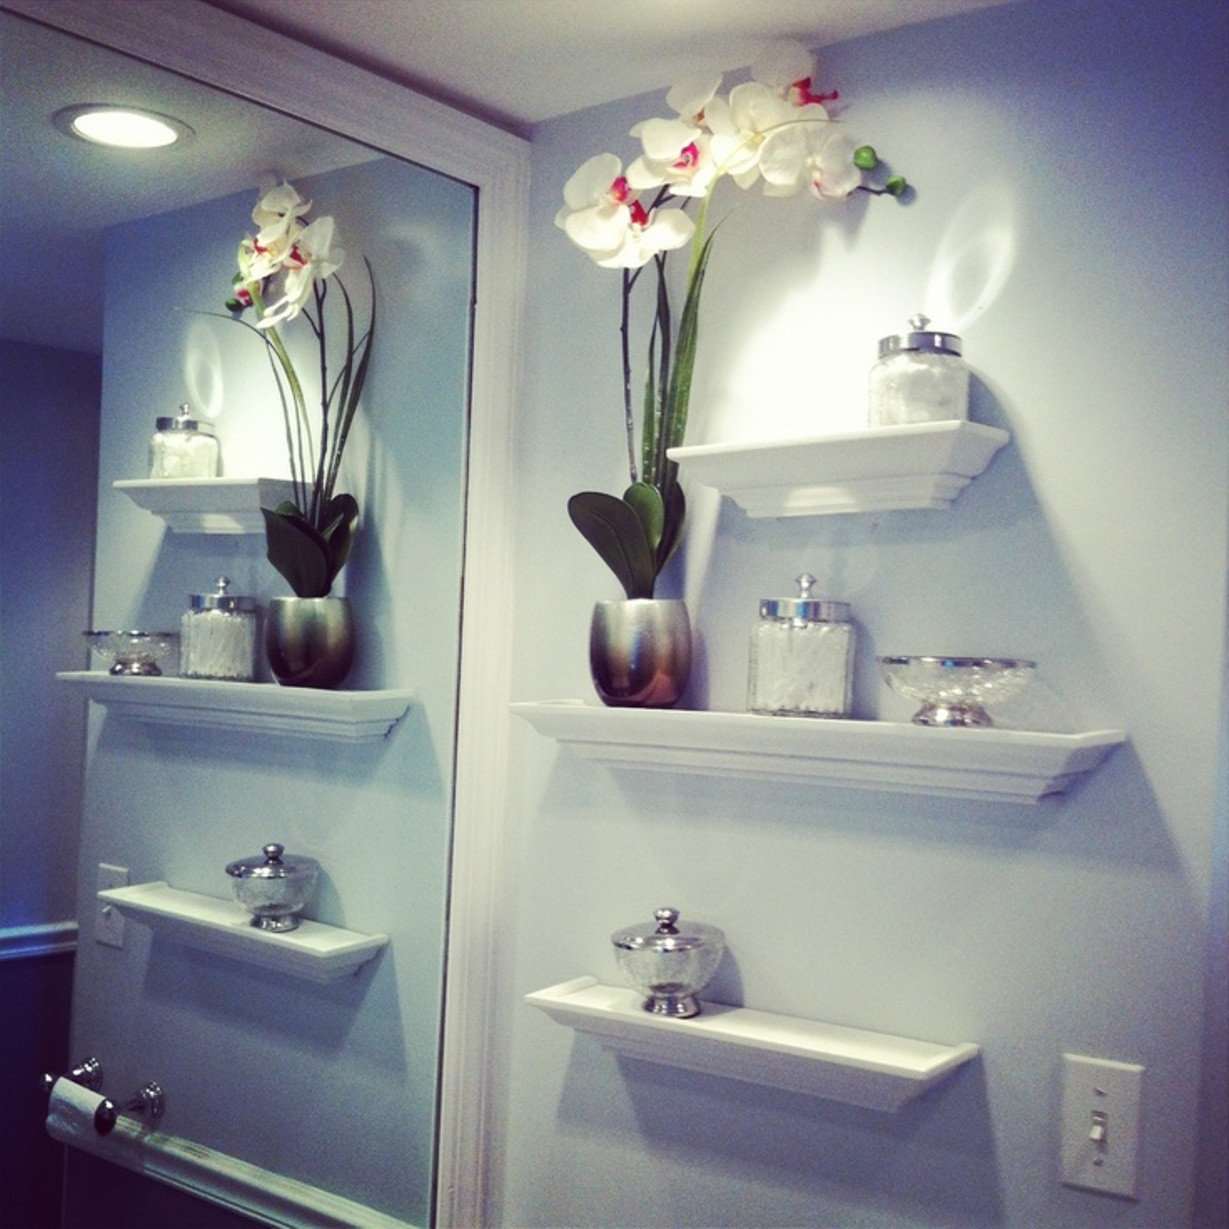 Decorative Bathroom Shelves
 Best Bathroom Wall Shelving Idea to Adorn Your Room